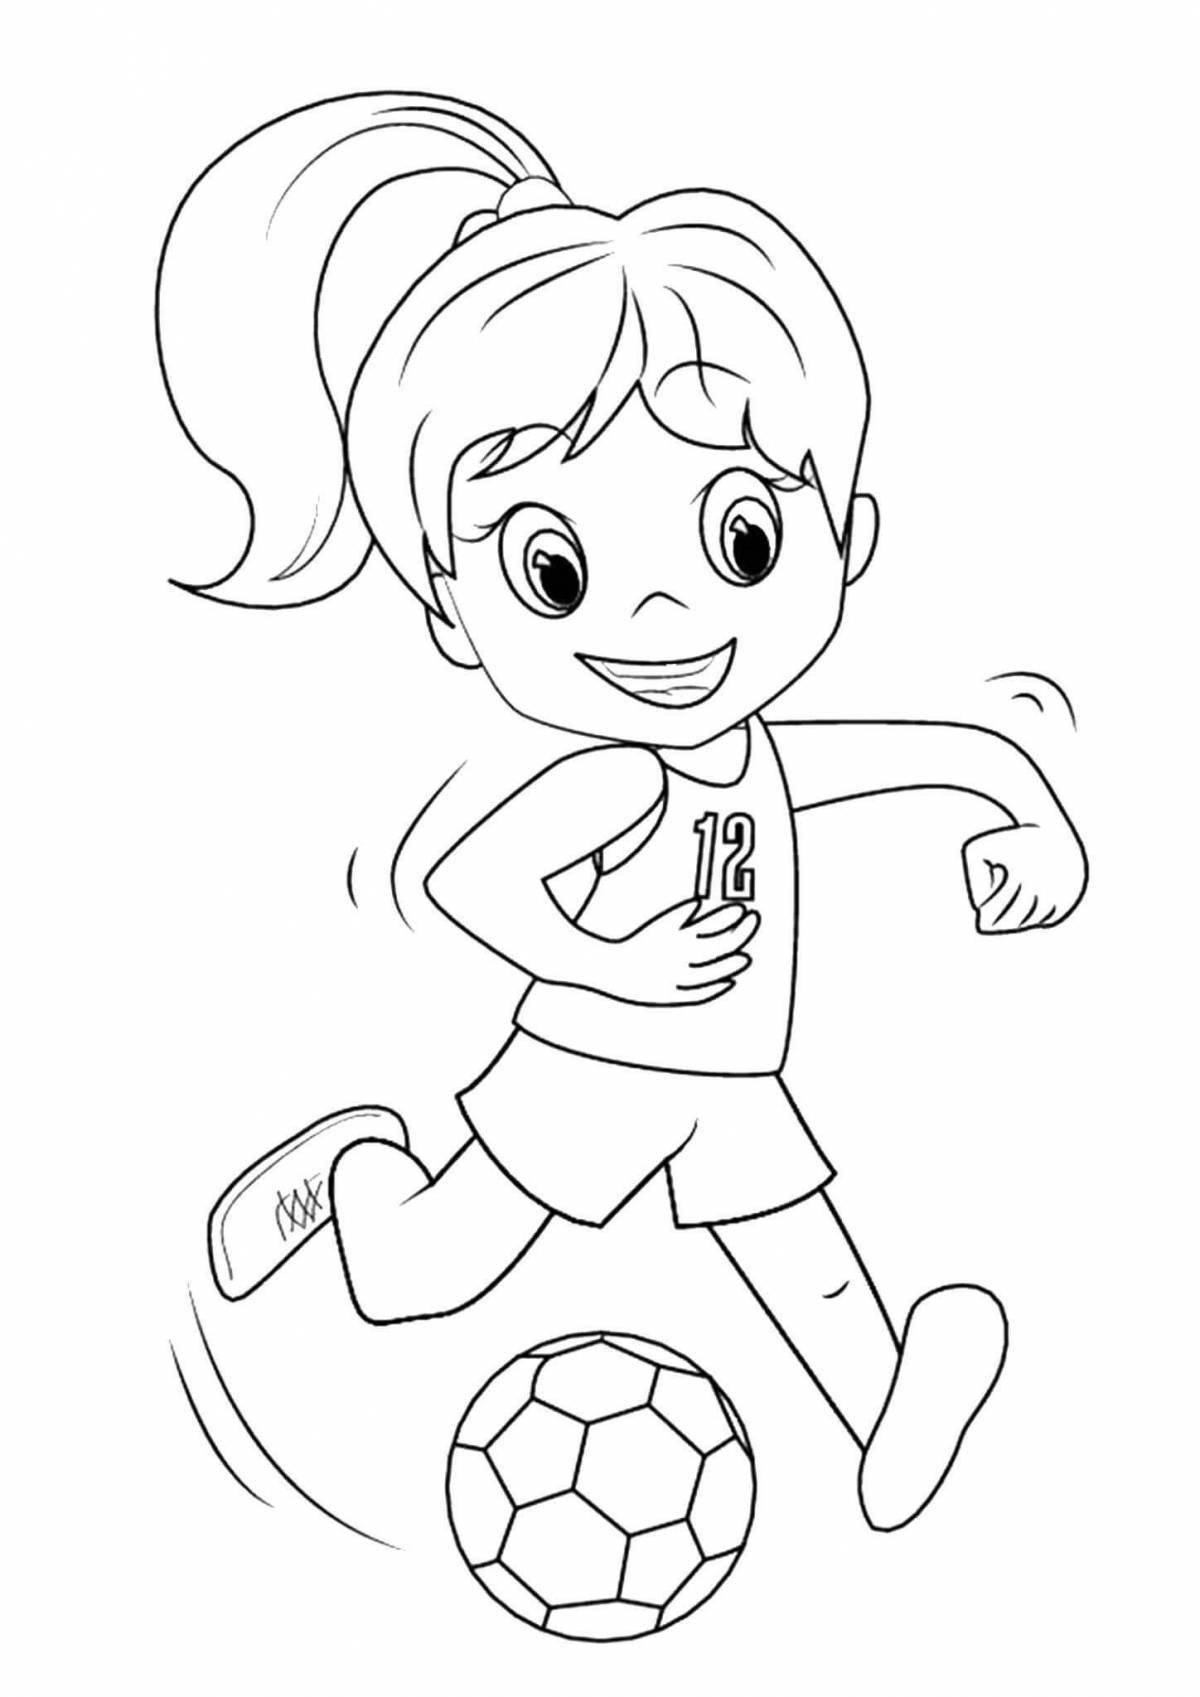 Adorable sports coloring book for preschoolers